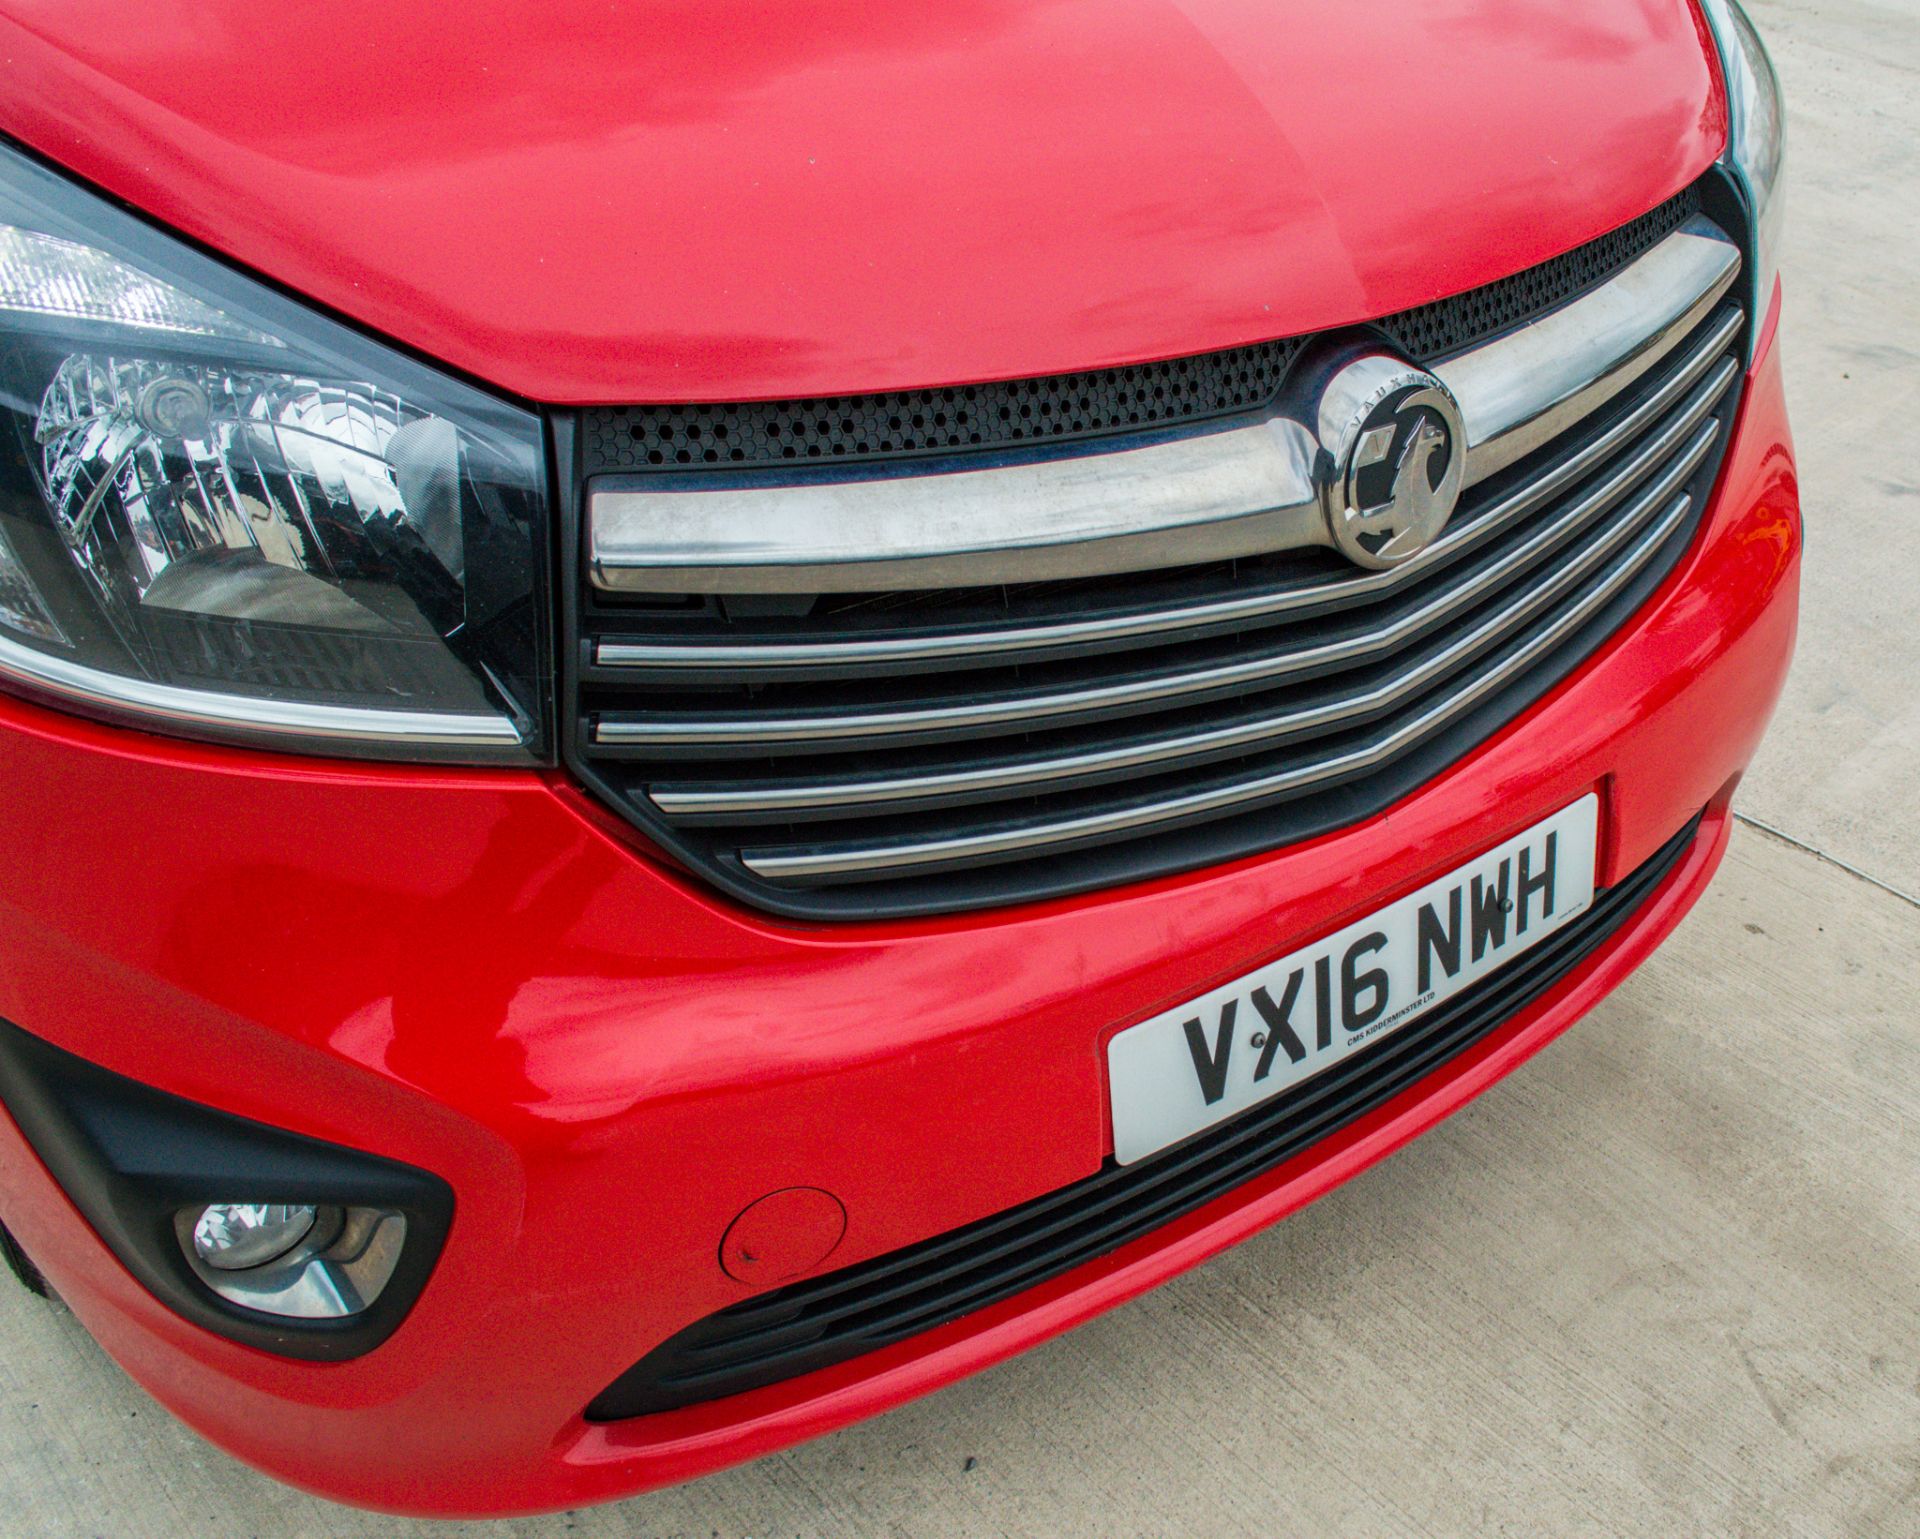 Vauxhall Vivaro 2.9T 1.6 CDTI 120 Bi Turbo LWB panel van Registration Number: VX16 NWH Date of - Image 11 of 28